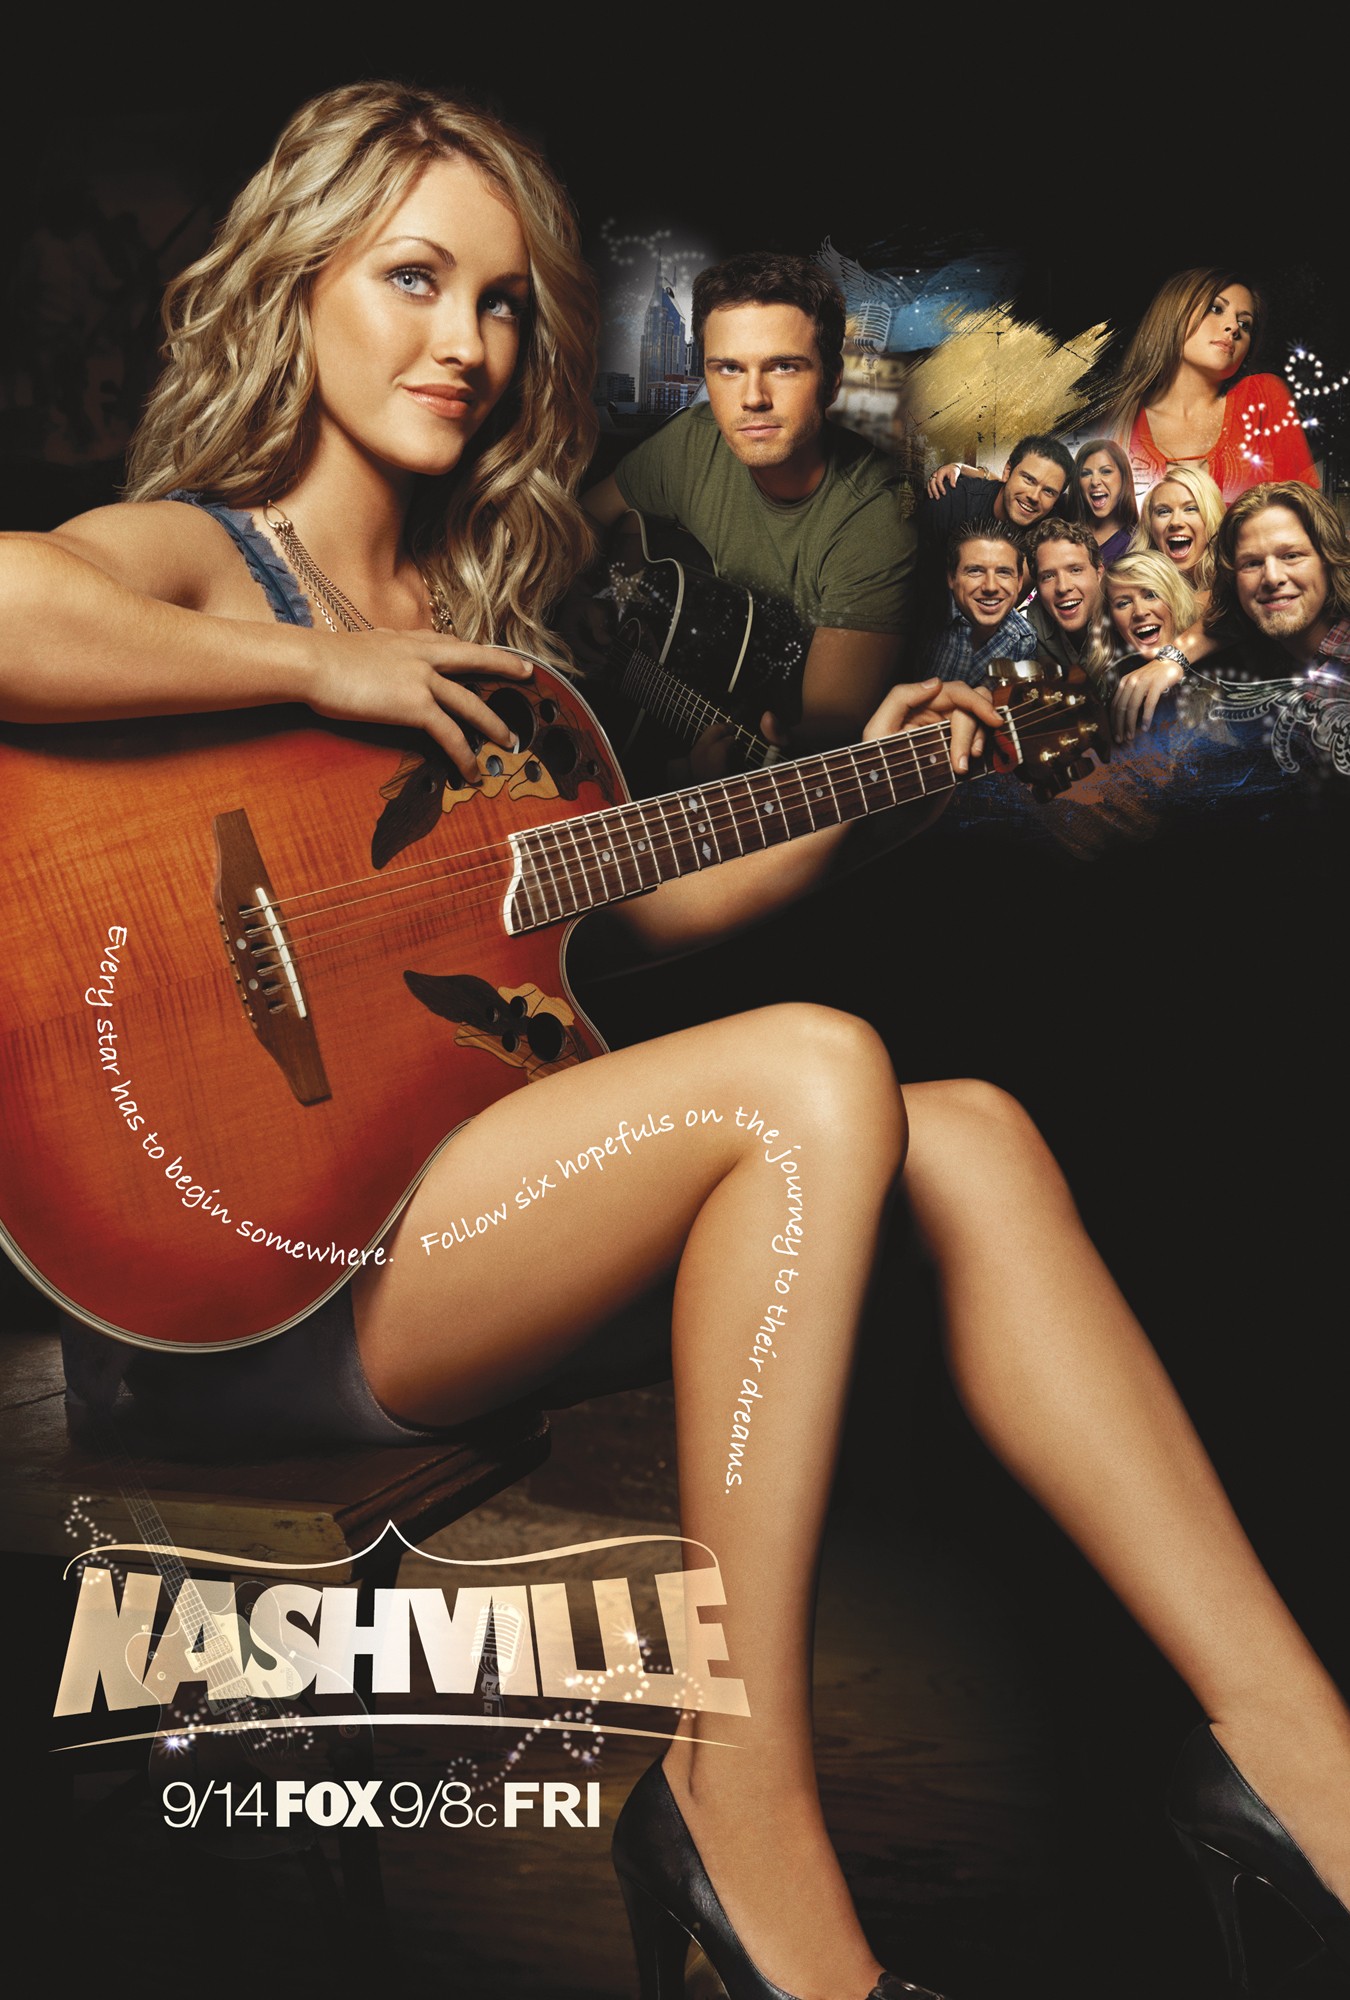 Mega Sized TV Poster Image for Nashville 